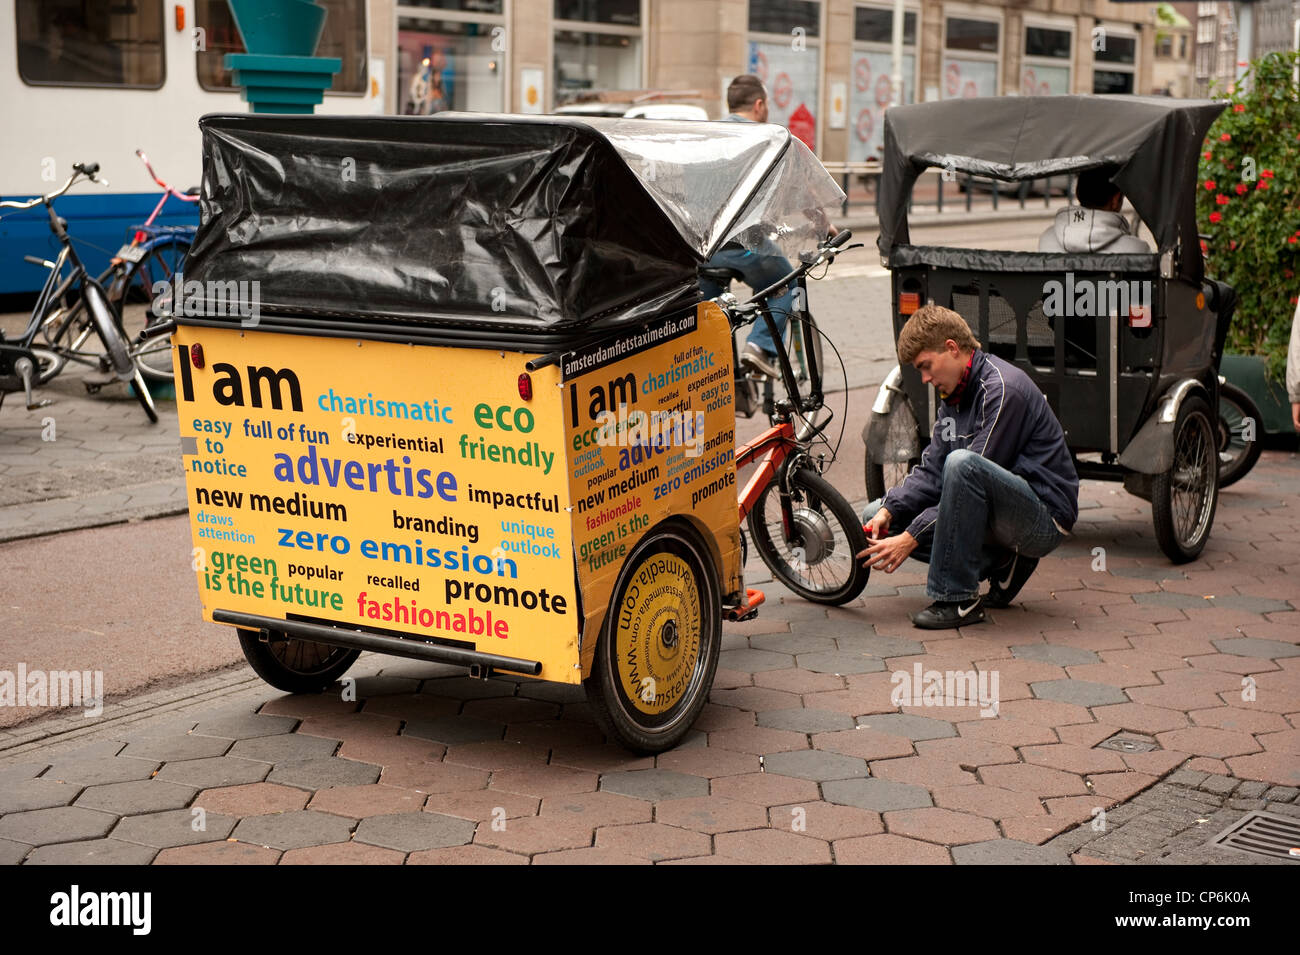 Advertising Eco friendly Bicycle City Tour Amsterdam Holland Netherlands Europe EU Stock Photo